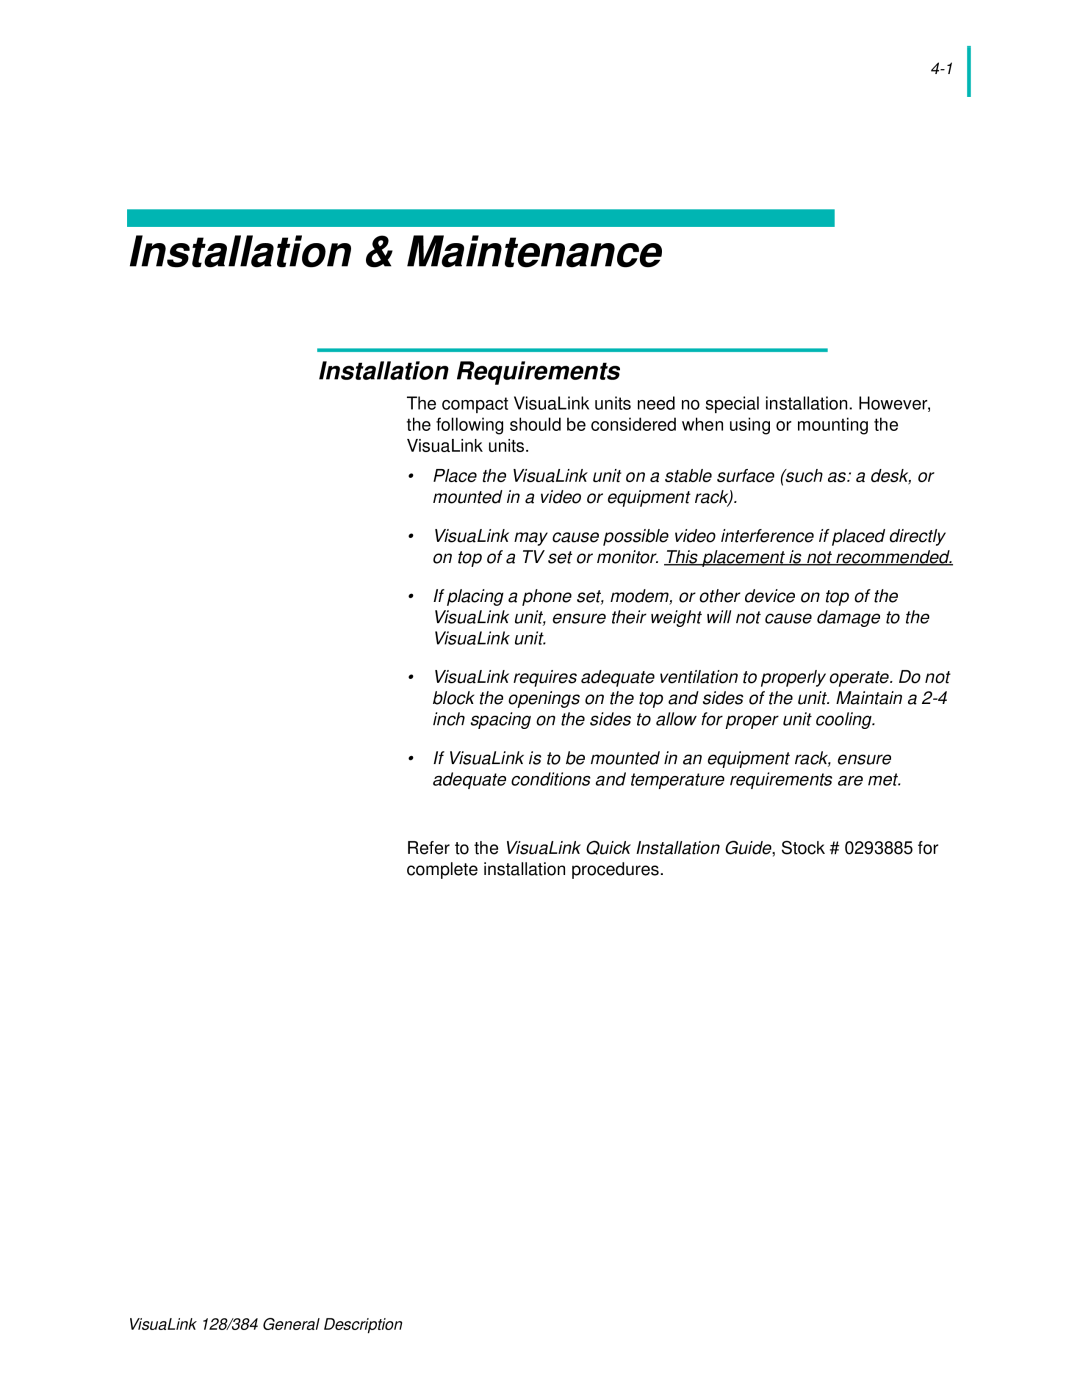 NEC 128 manual Installation & Maintenance, Installation Requirements 